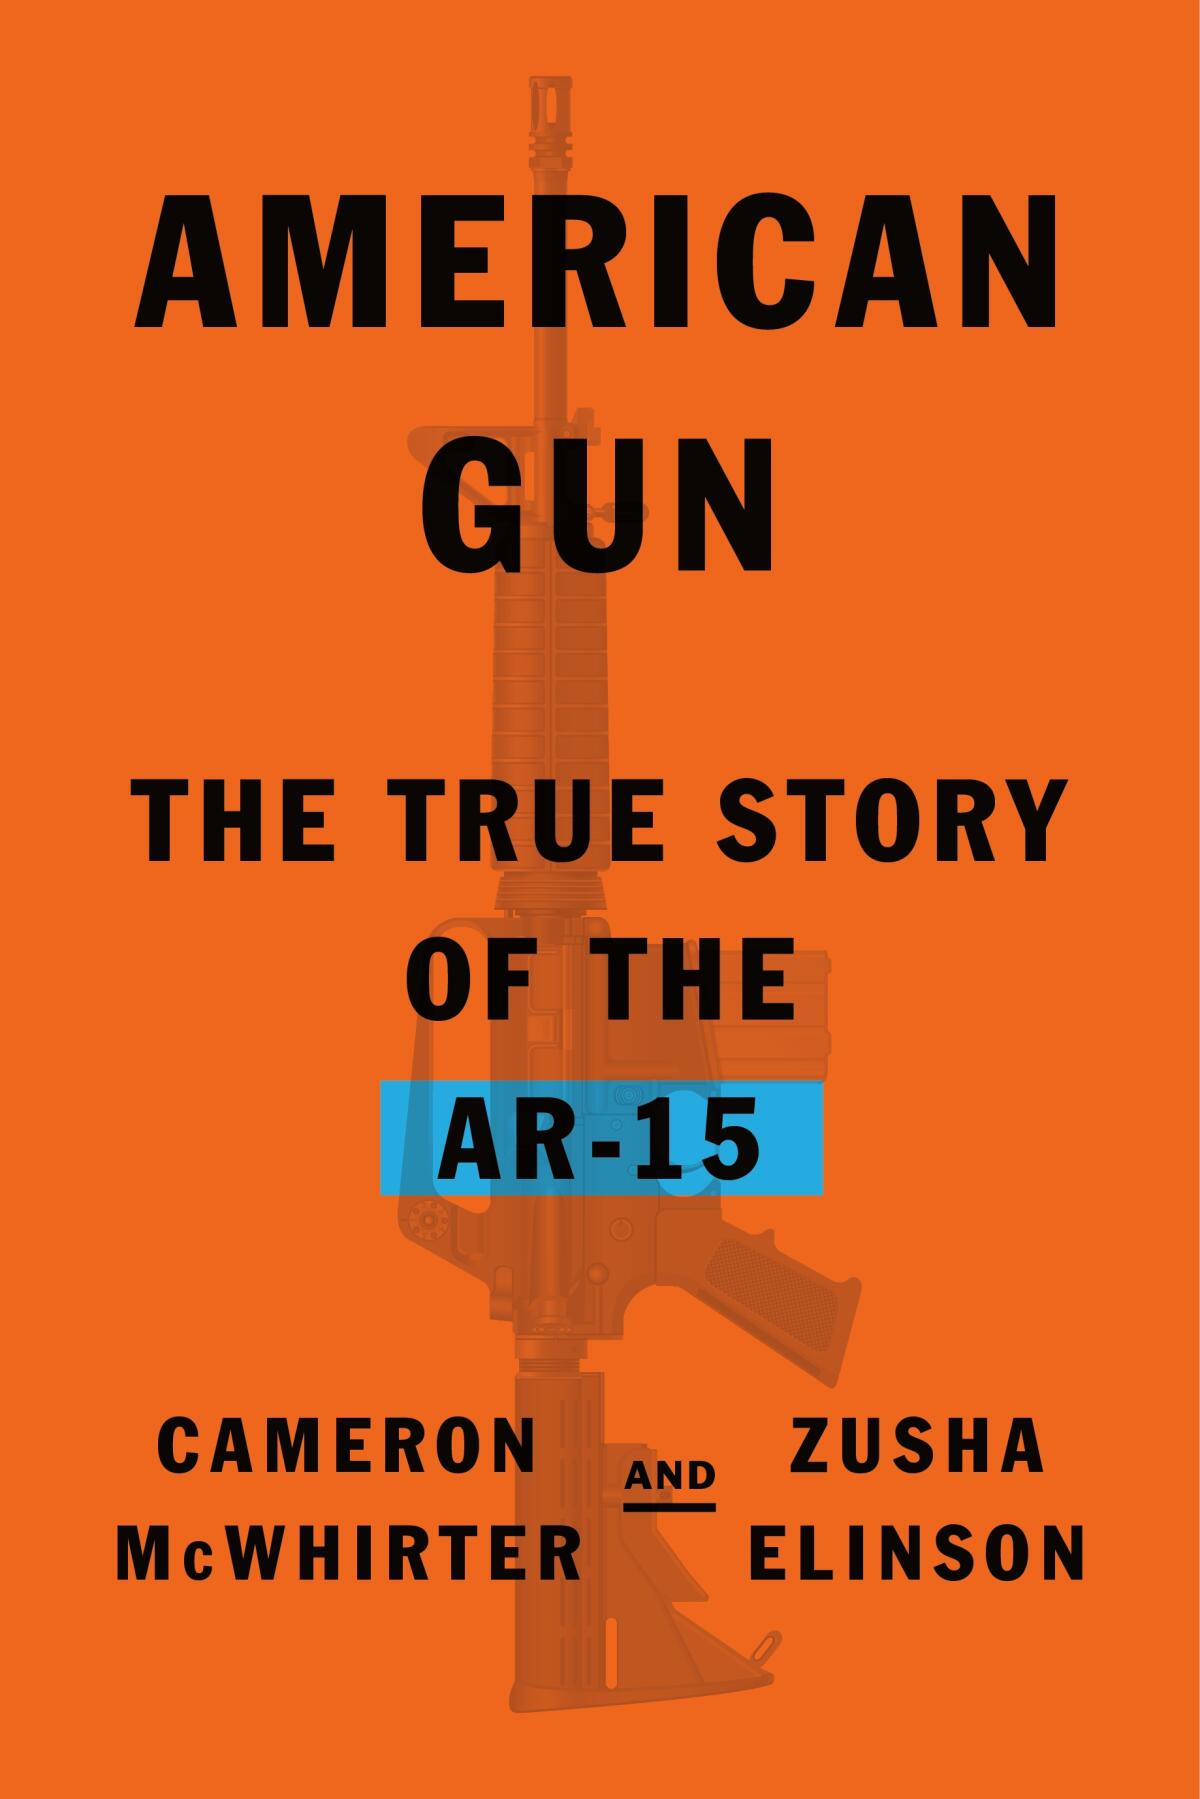 "American Gun," by Cameron McWhirter and Zusha Elinson